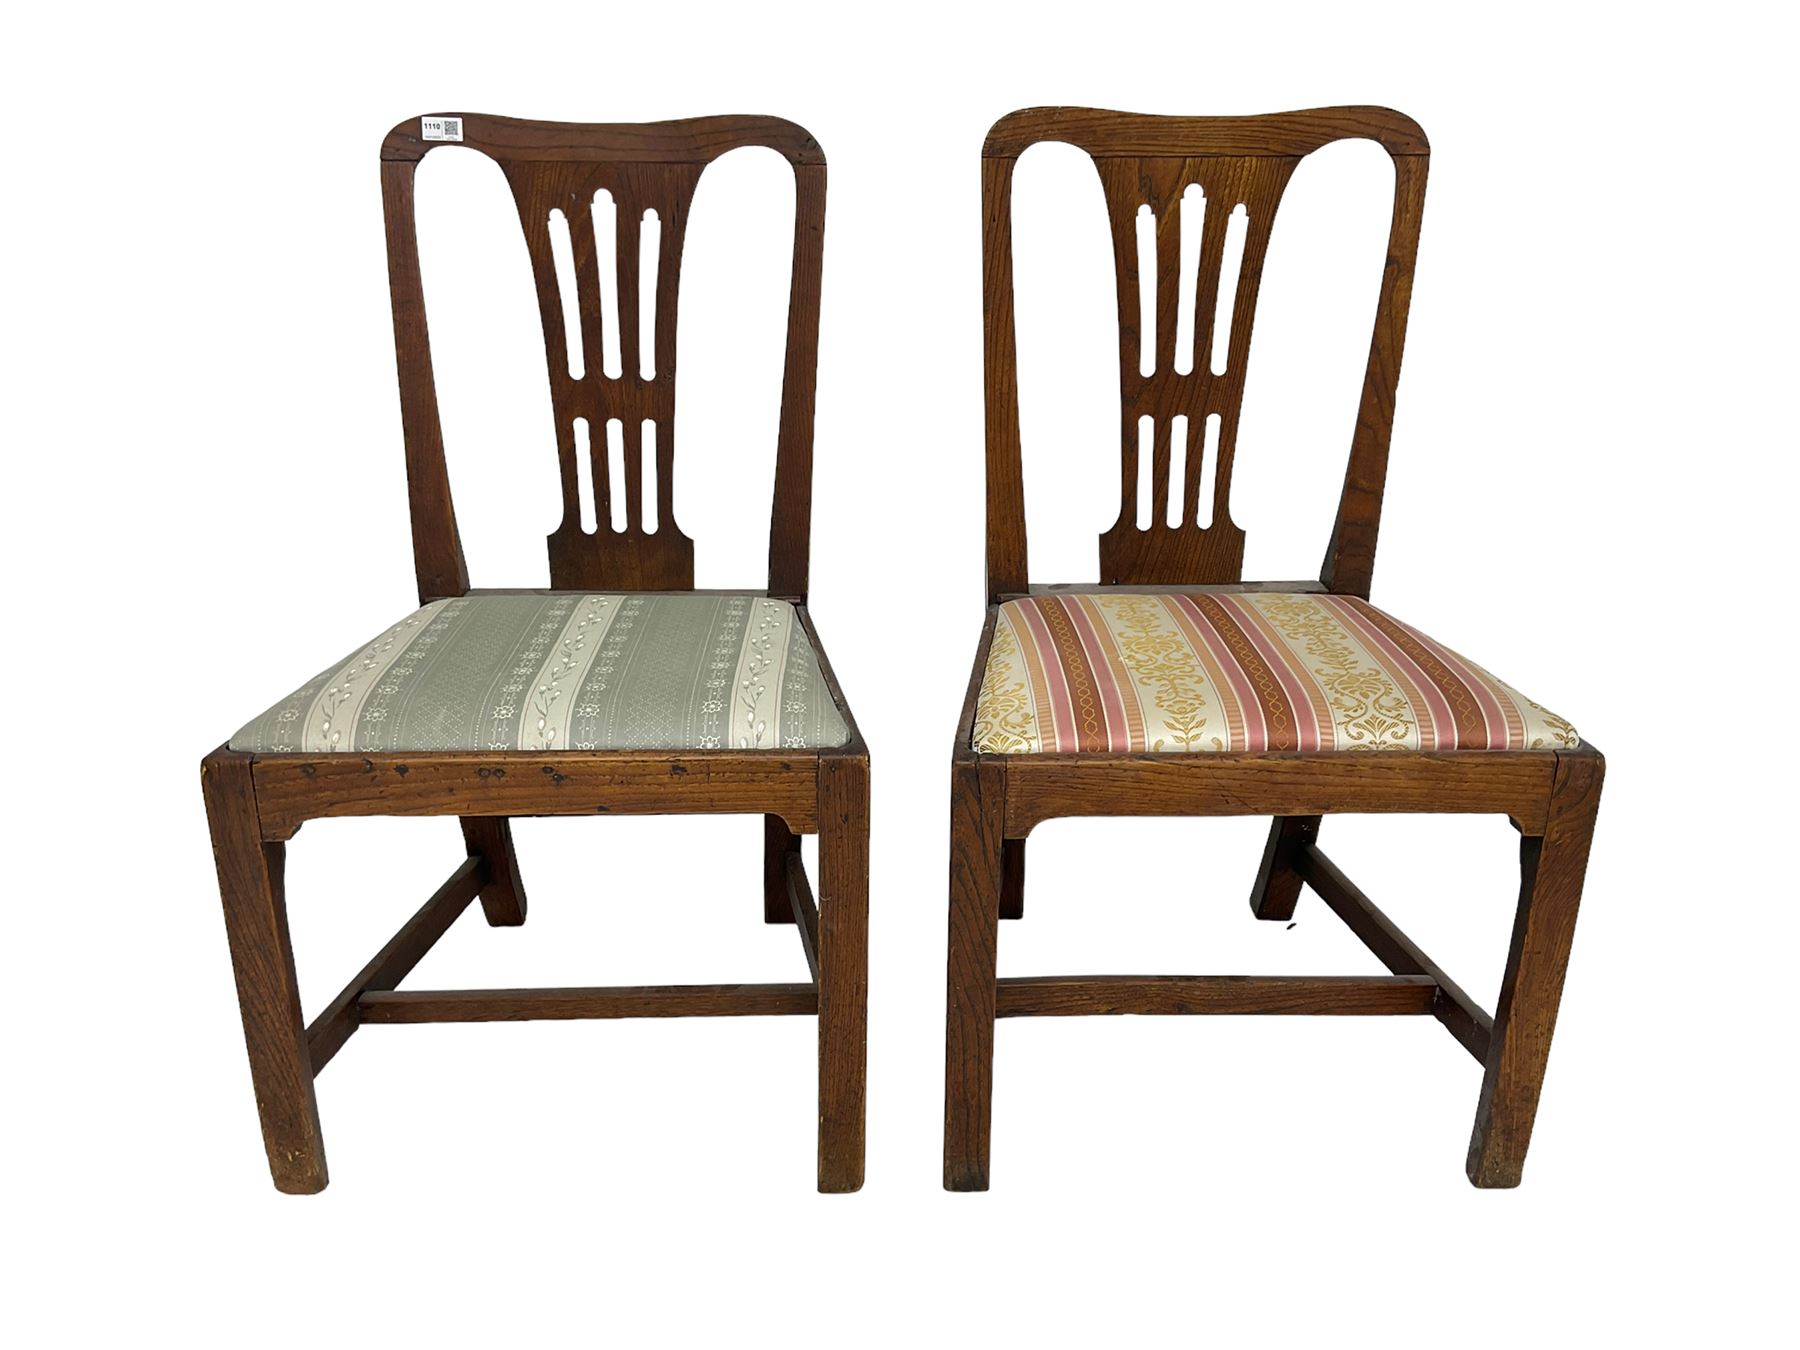 Pair 19th century elm chairs